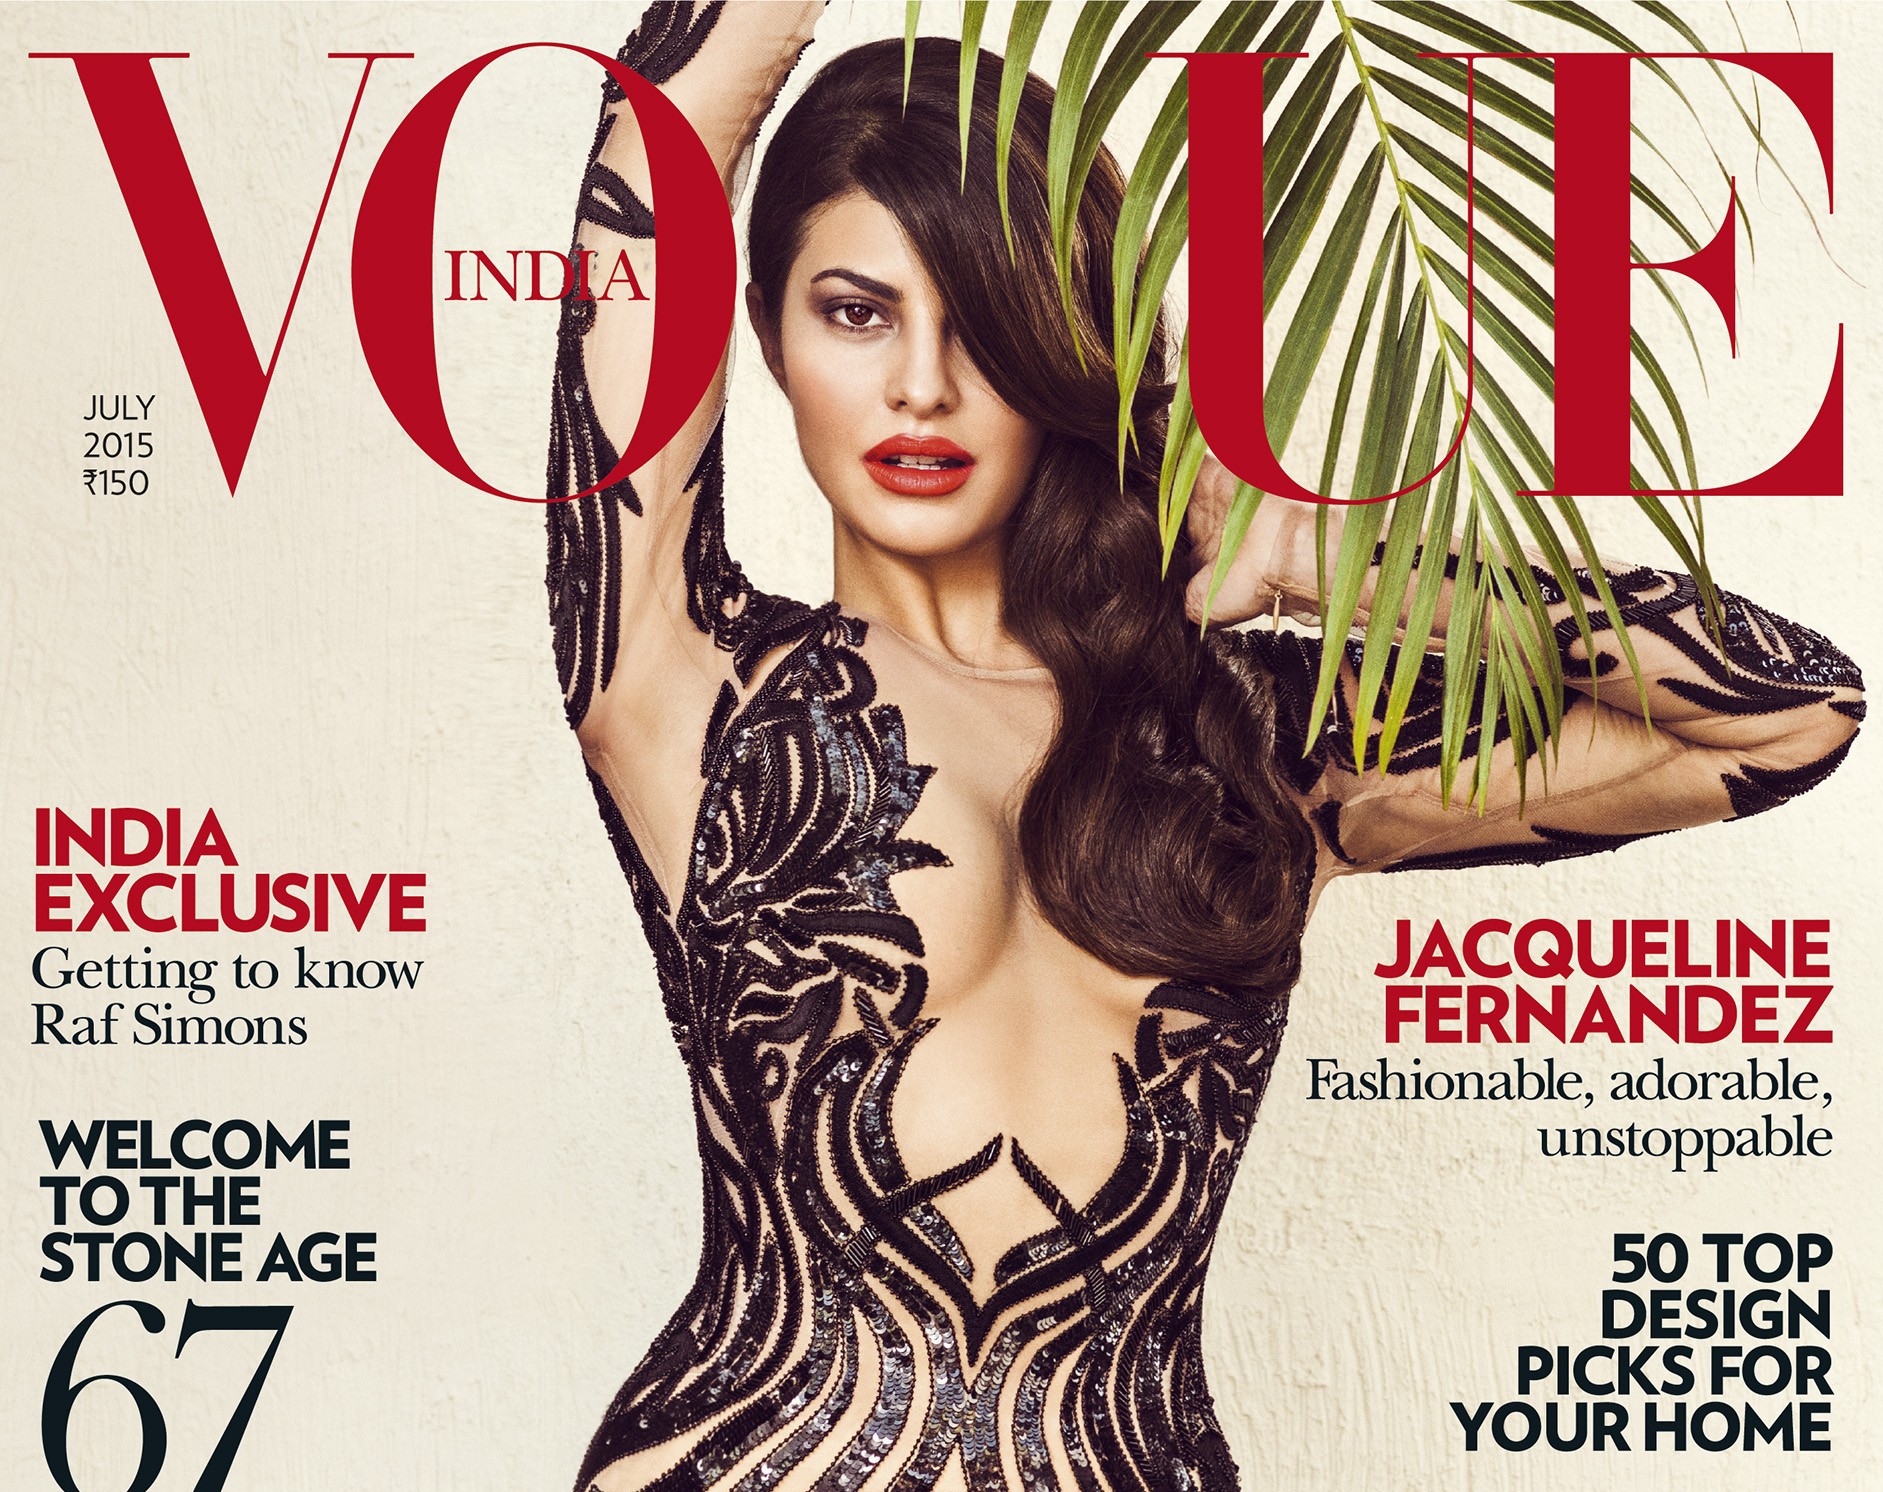 Jacqueline Fernandez cover of Vogue India July '15